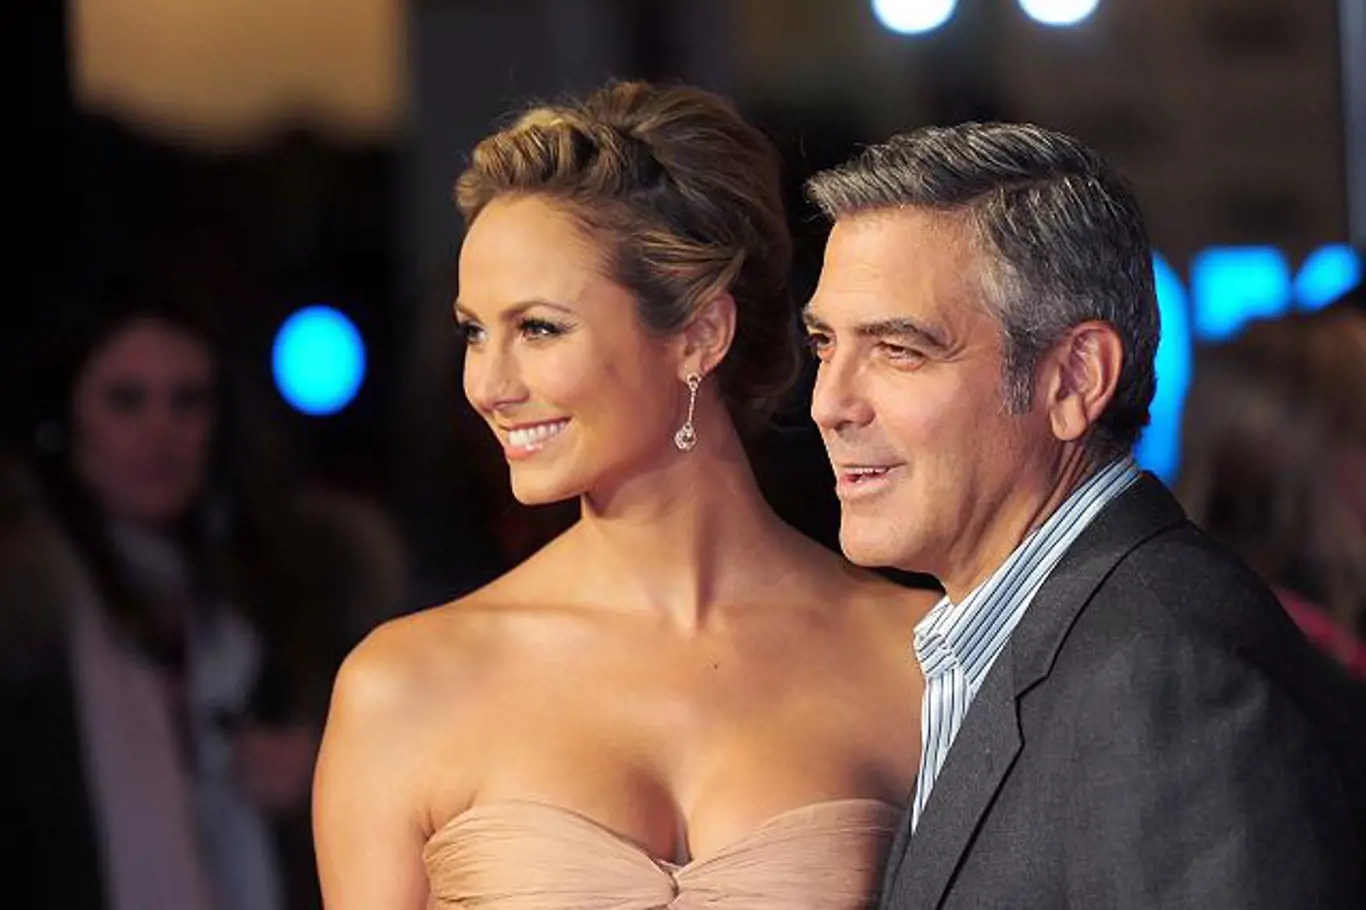 Herec a režisér George Clooney vzal svoji novou lásku Stacy Keibler do Londýna na premiéru filmu The Descendants